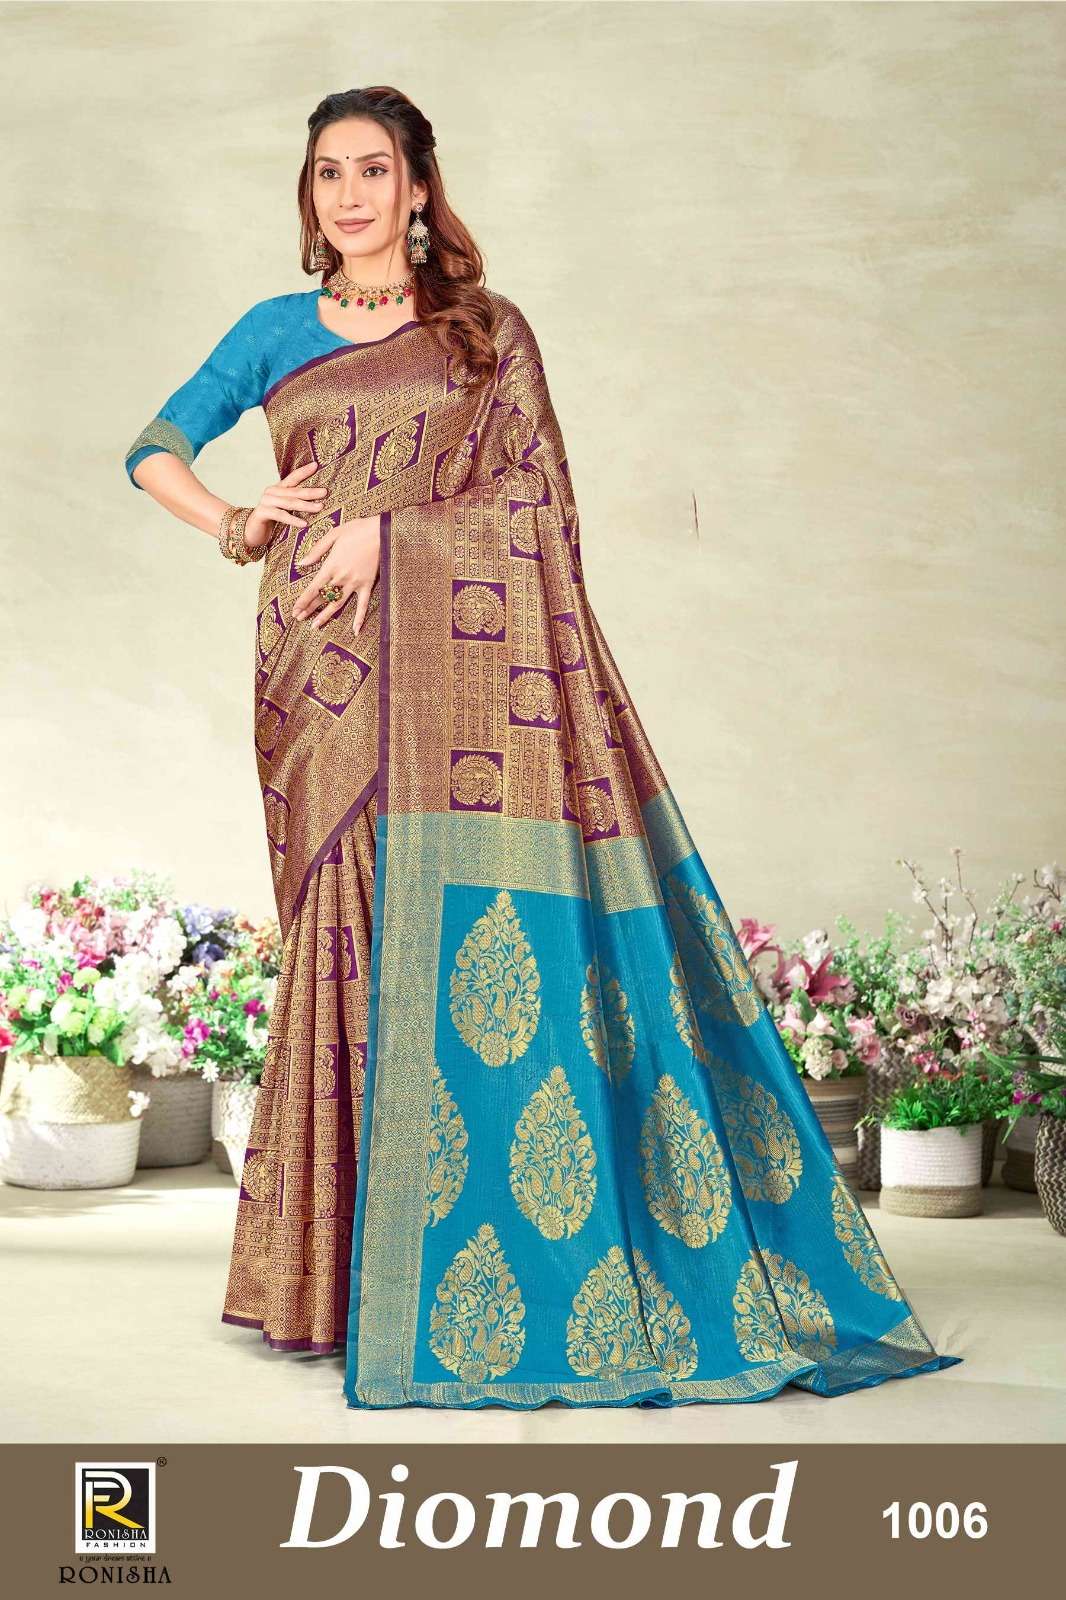 Ronisha Diomond Banarasi Silk Saree Wholesale catalog